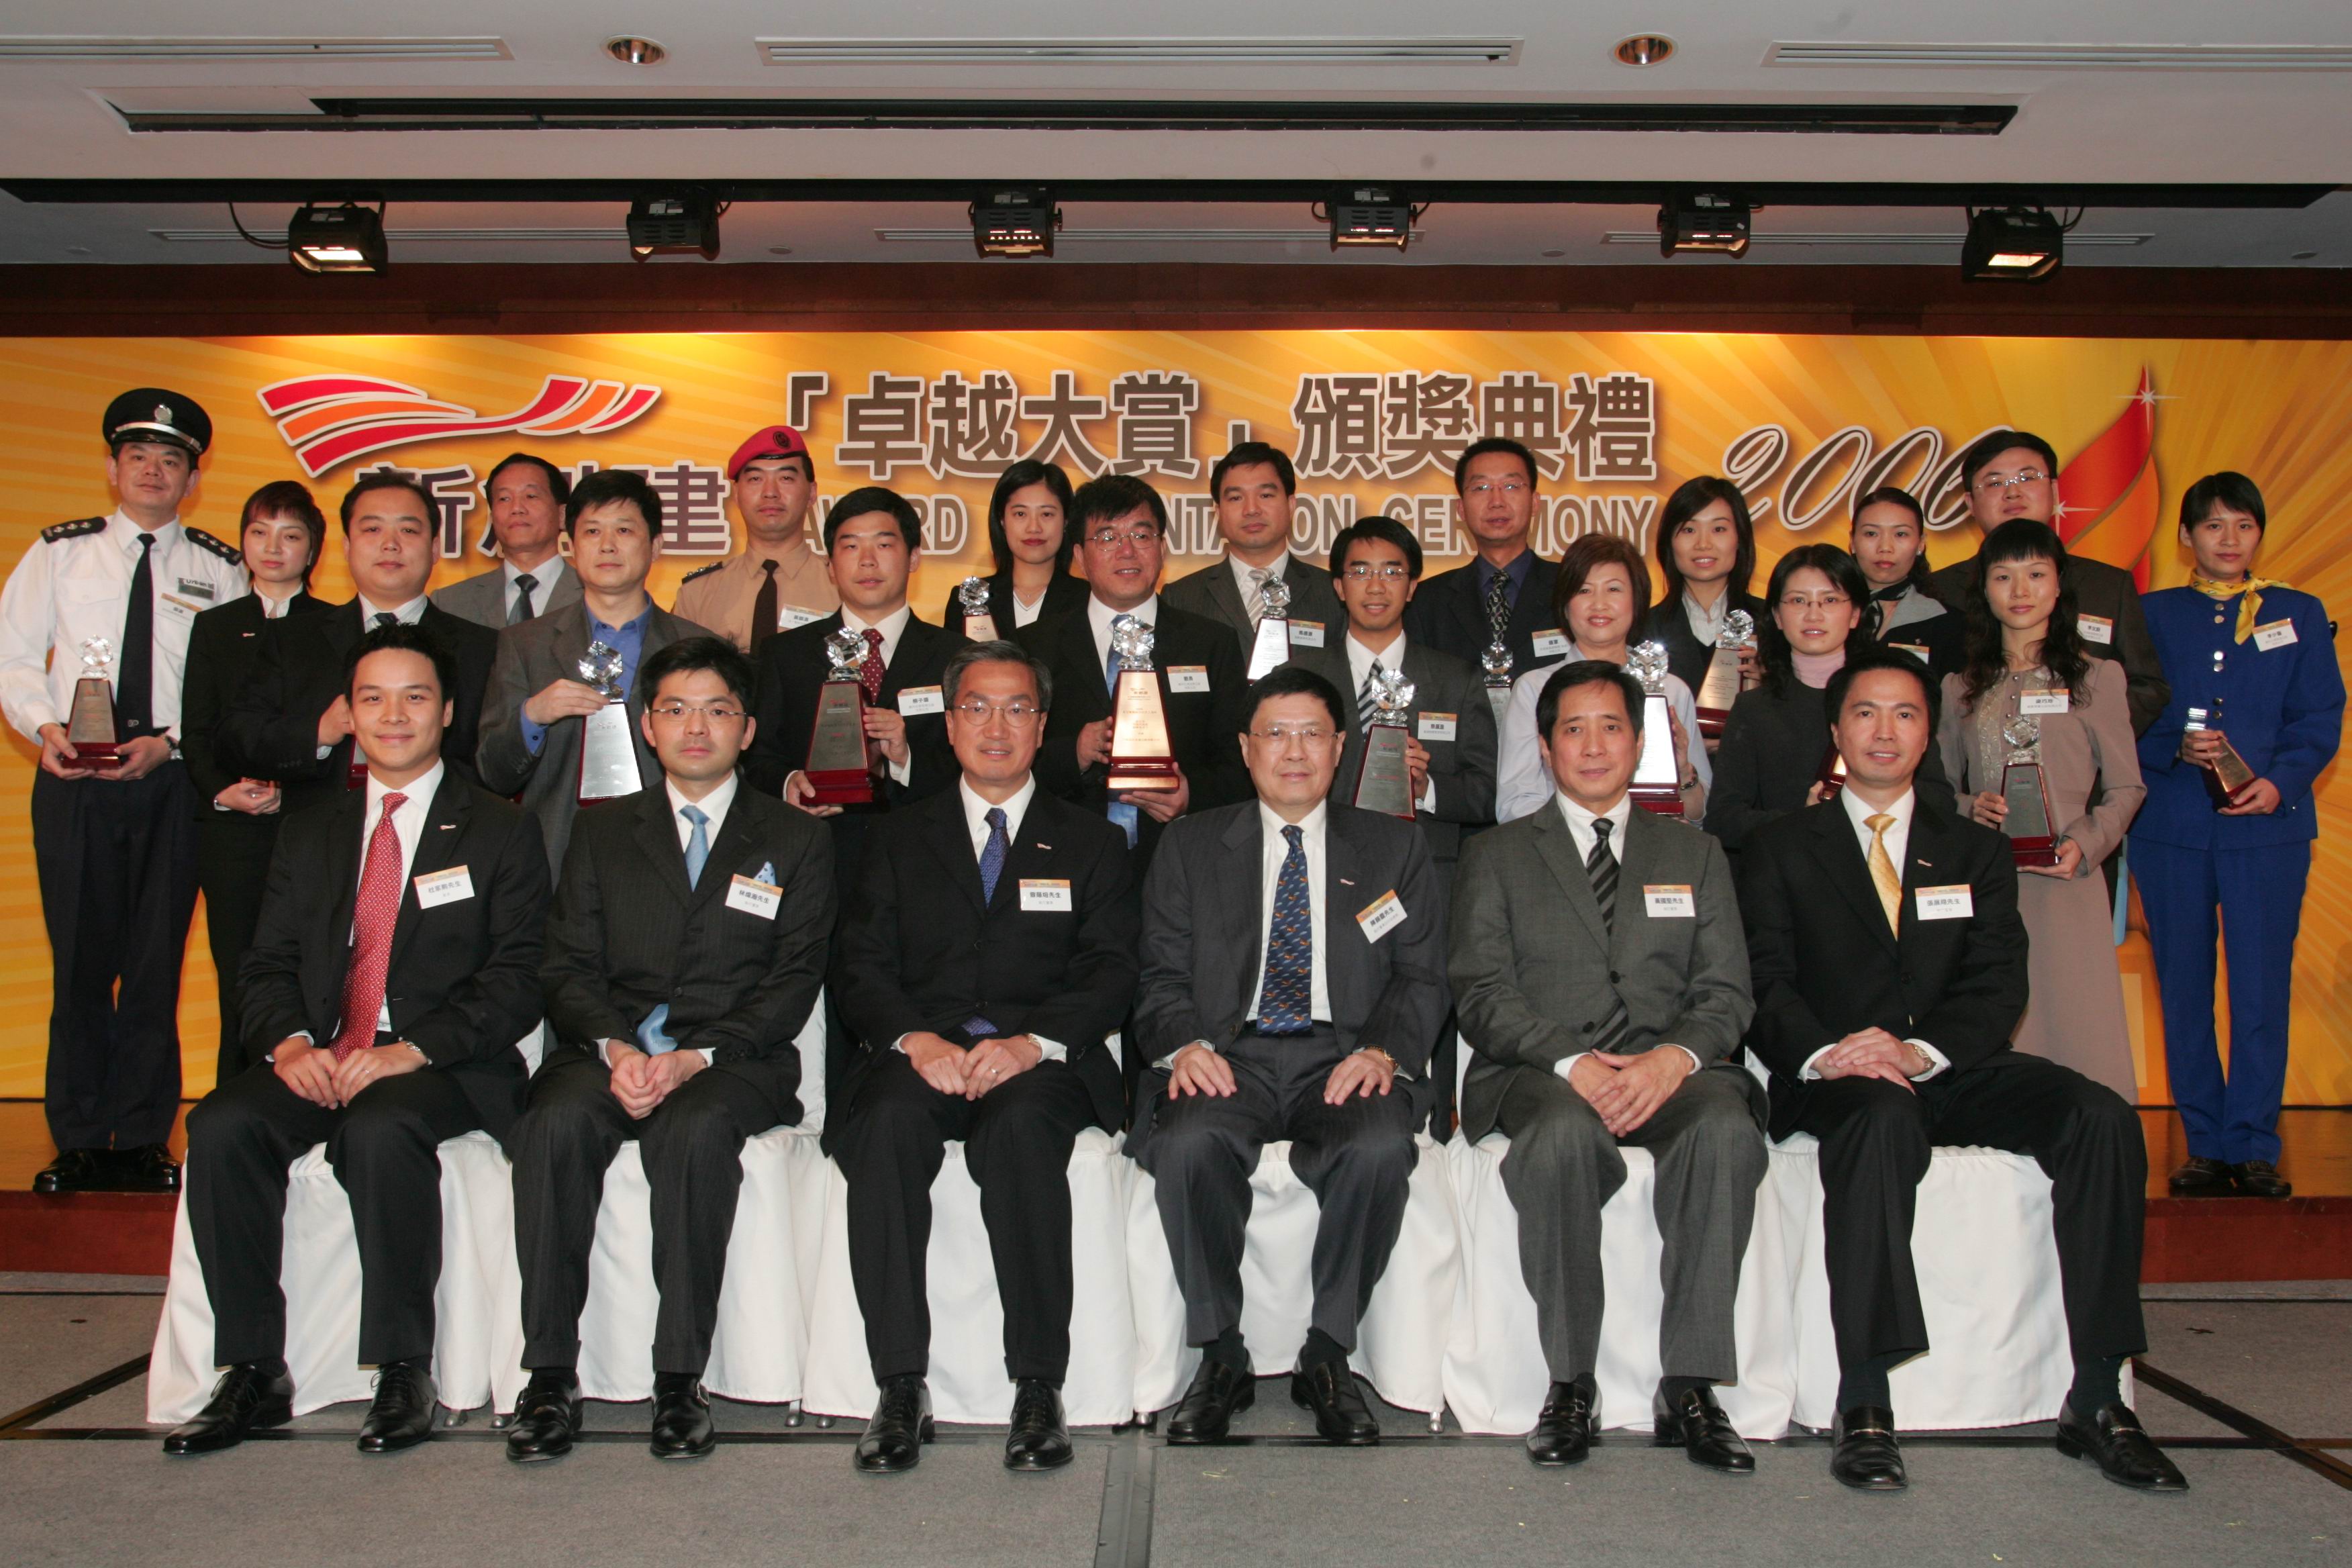 NWSH Award Presentation Ceremony 2006